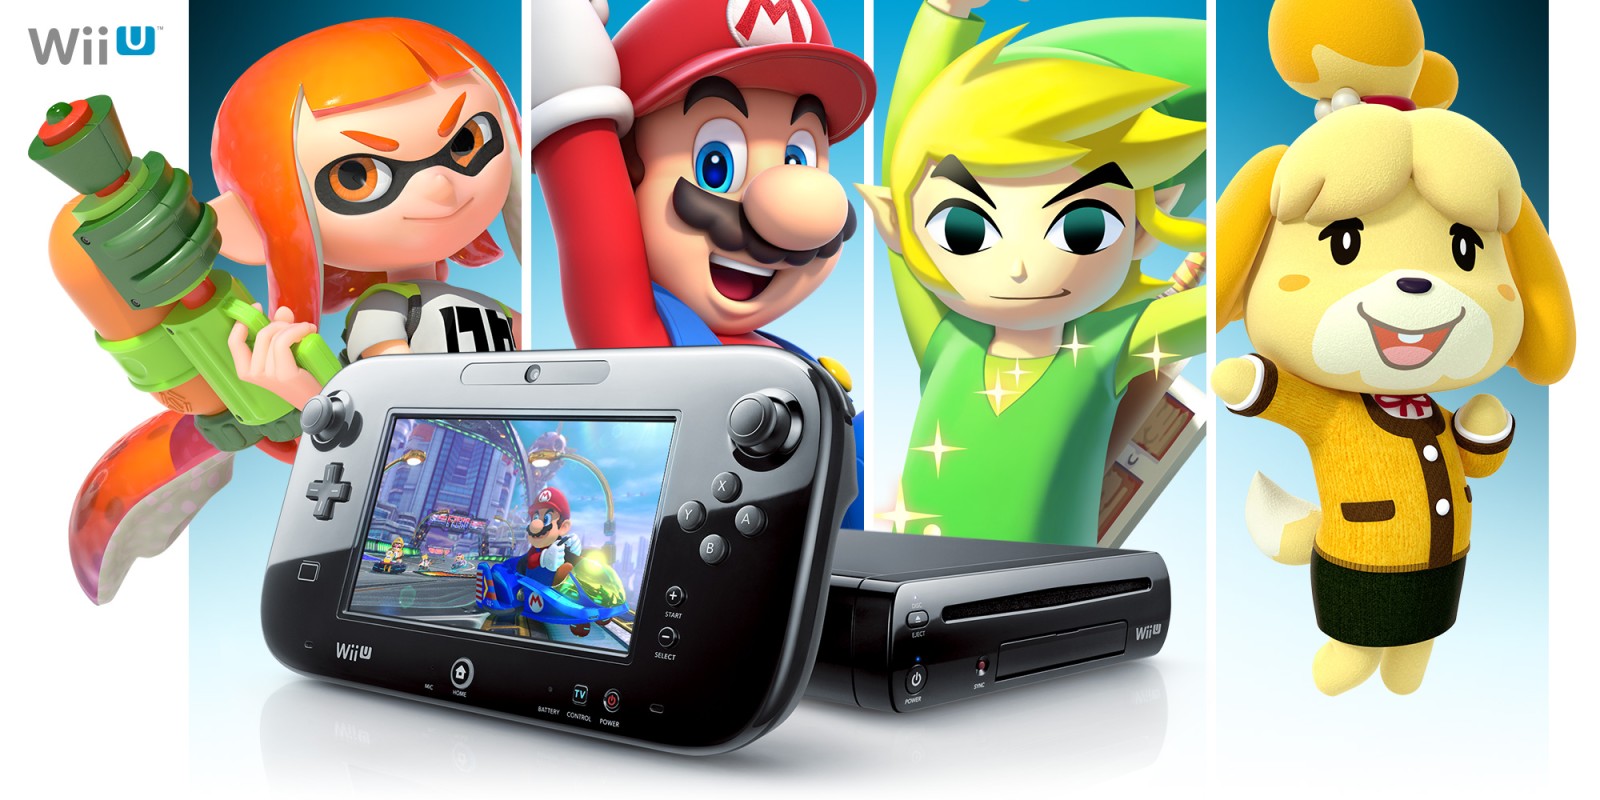 Scheermes Dapperheid Gouverneur Wii U | Nintendo